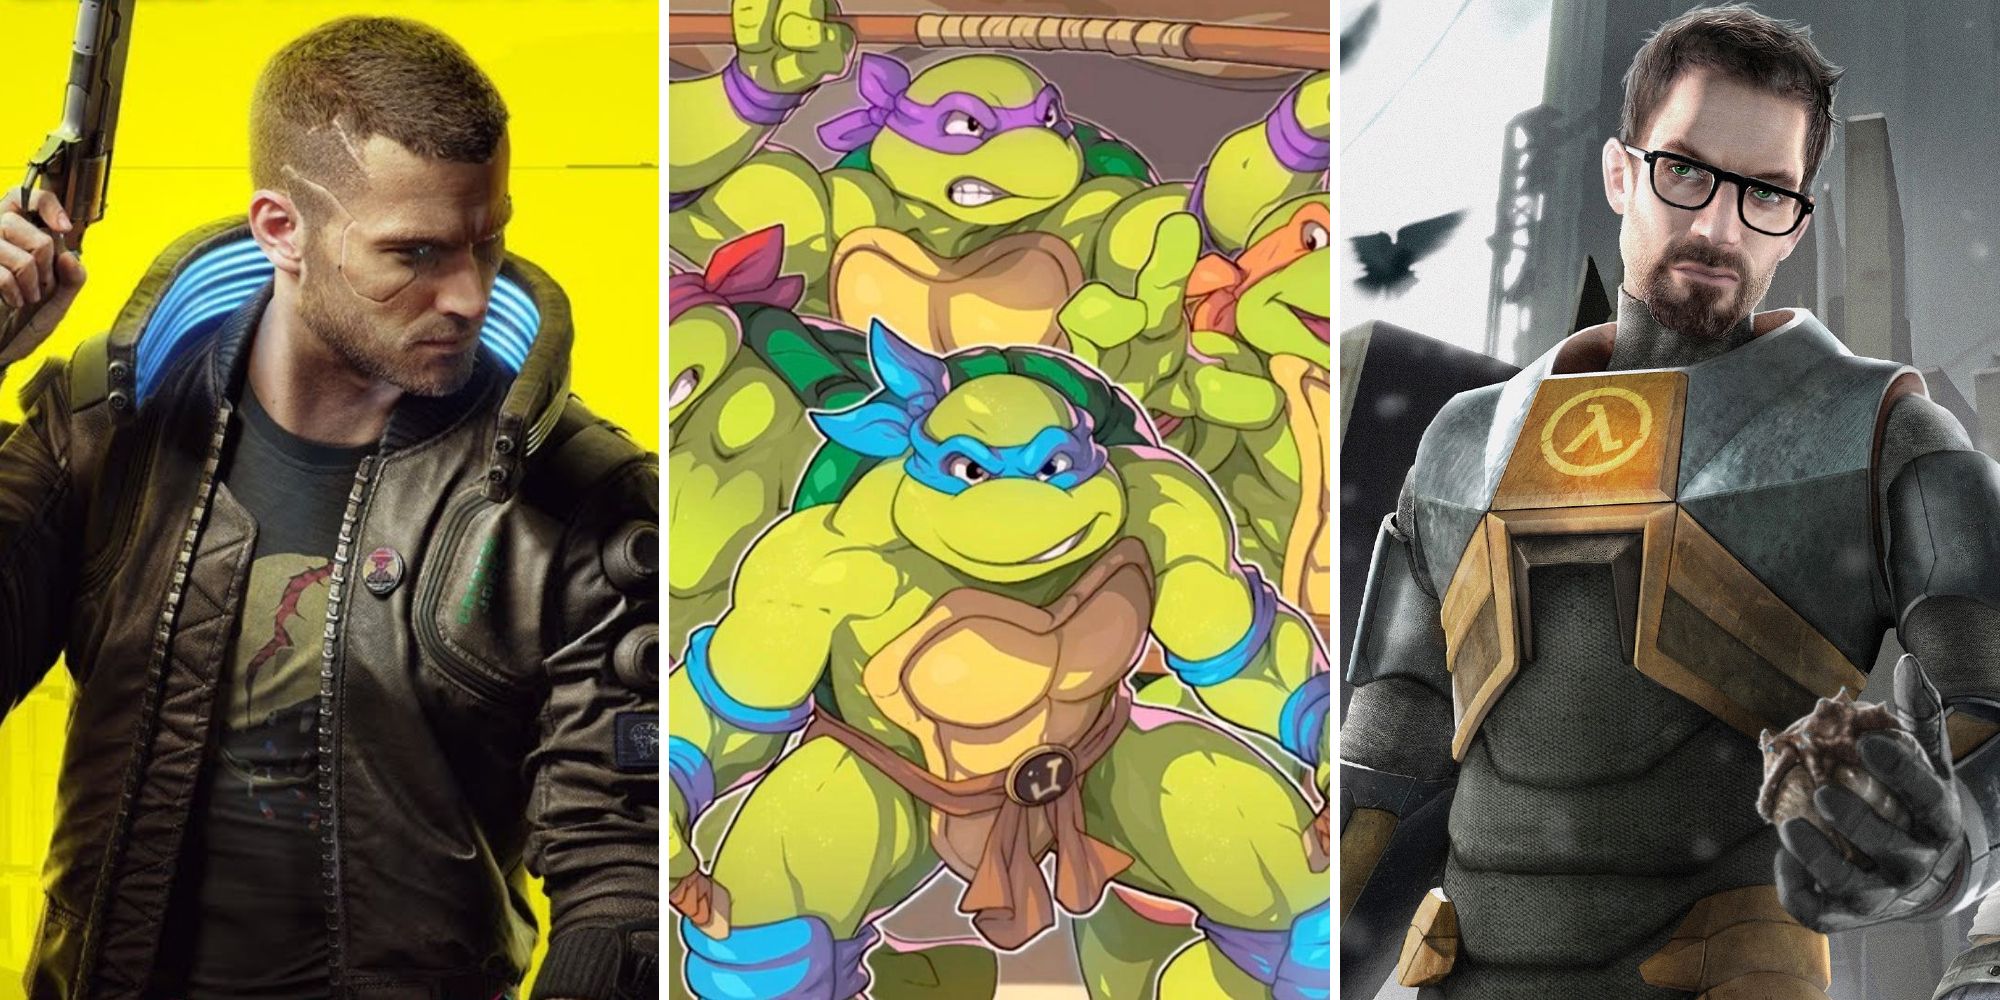 V from Cyberpunk, the Ninja Turtles, and Gordon Freeman